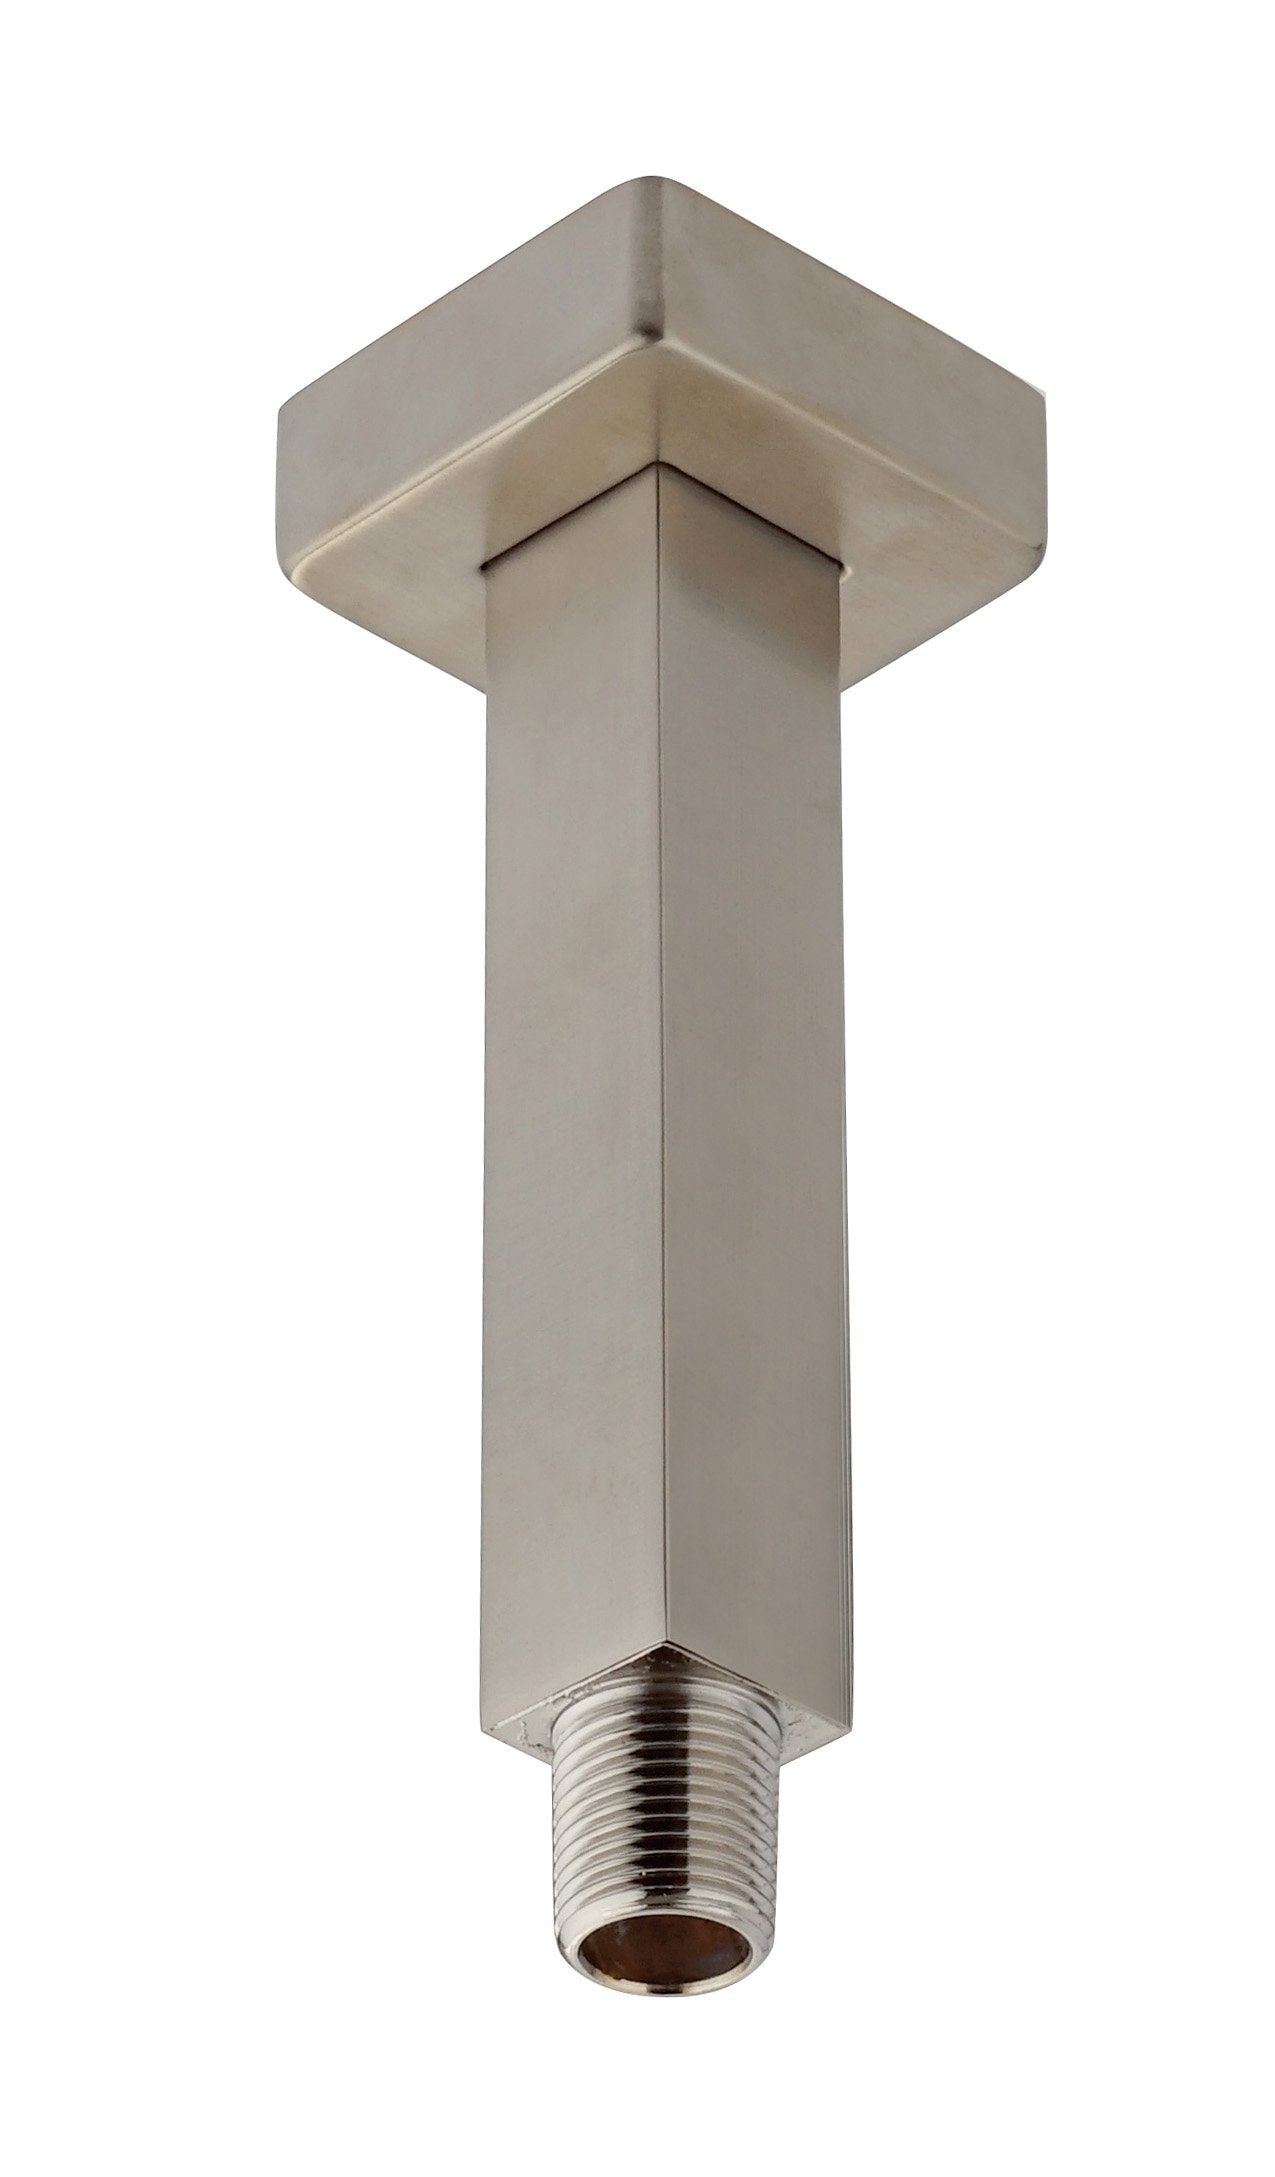 Latoscana SQPW74406 Ceiling Shower Arm With Strengthened Fixing Brushed Nickel Shower Arm Latoscana 